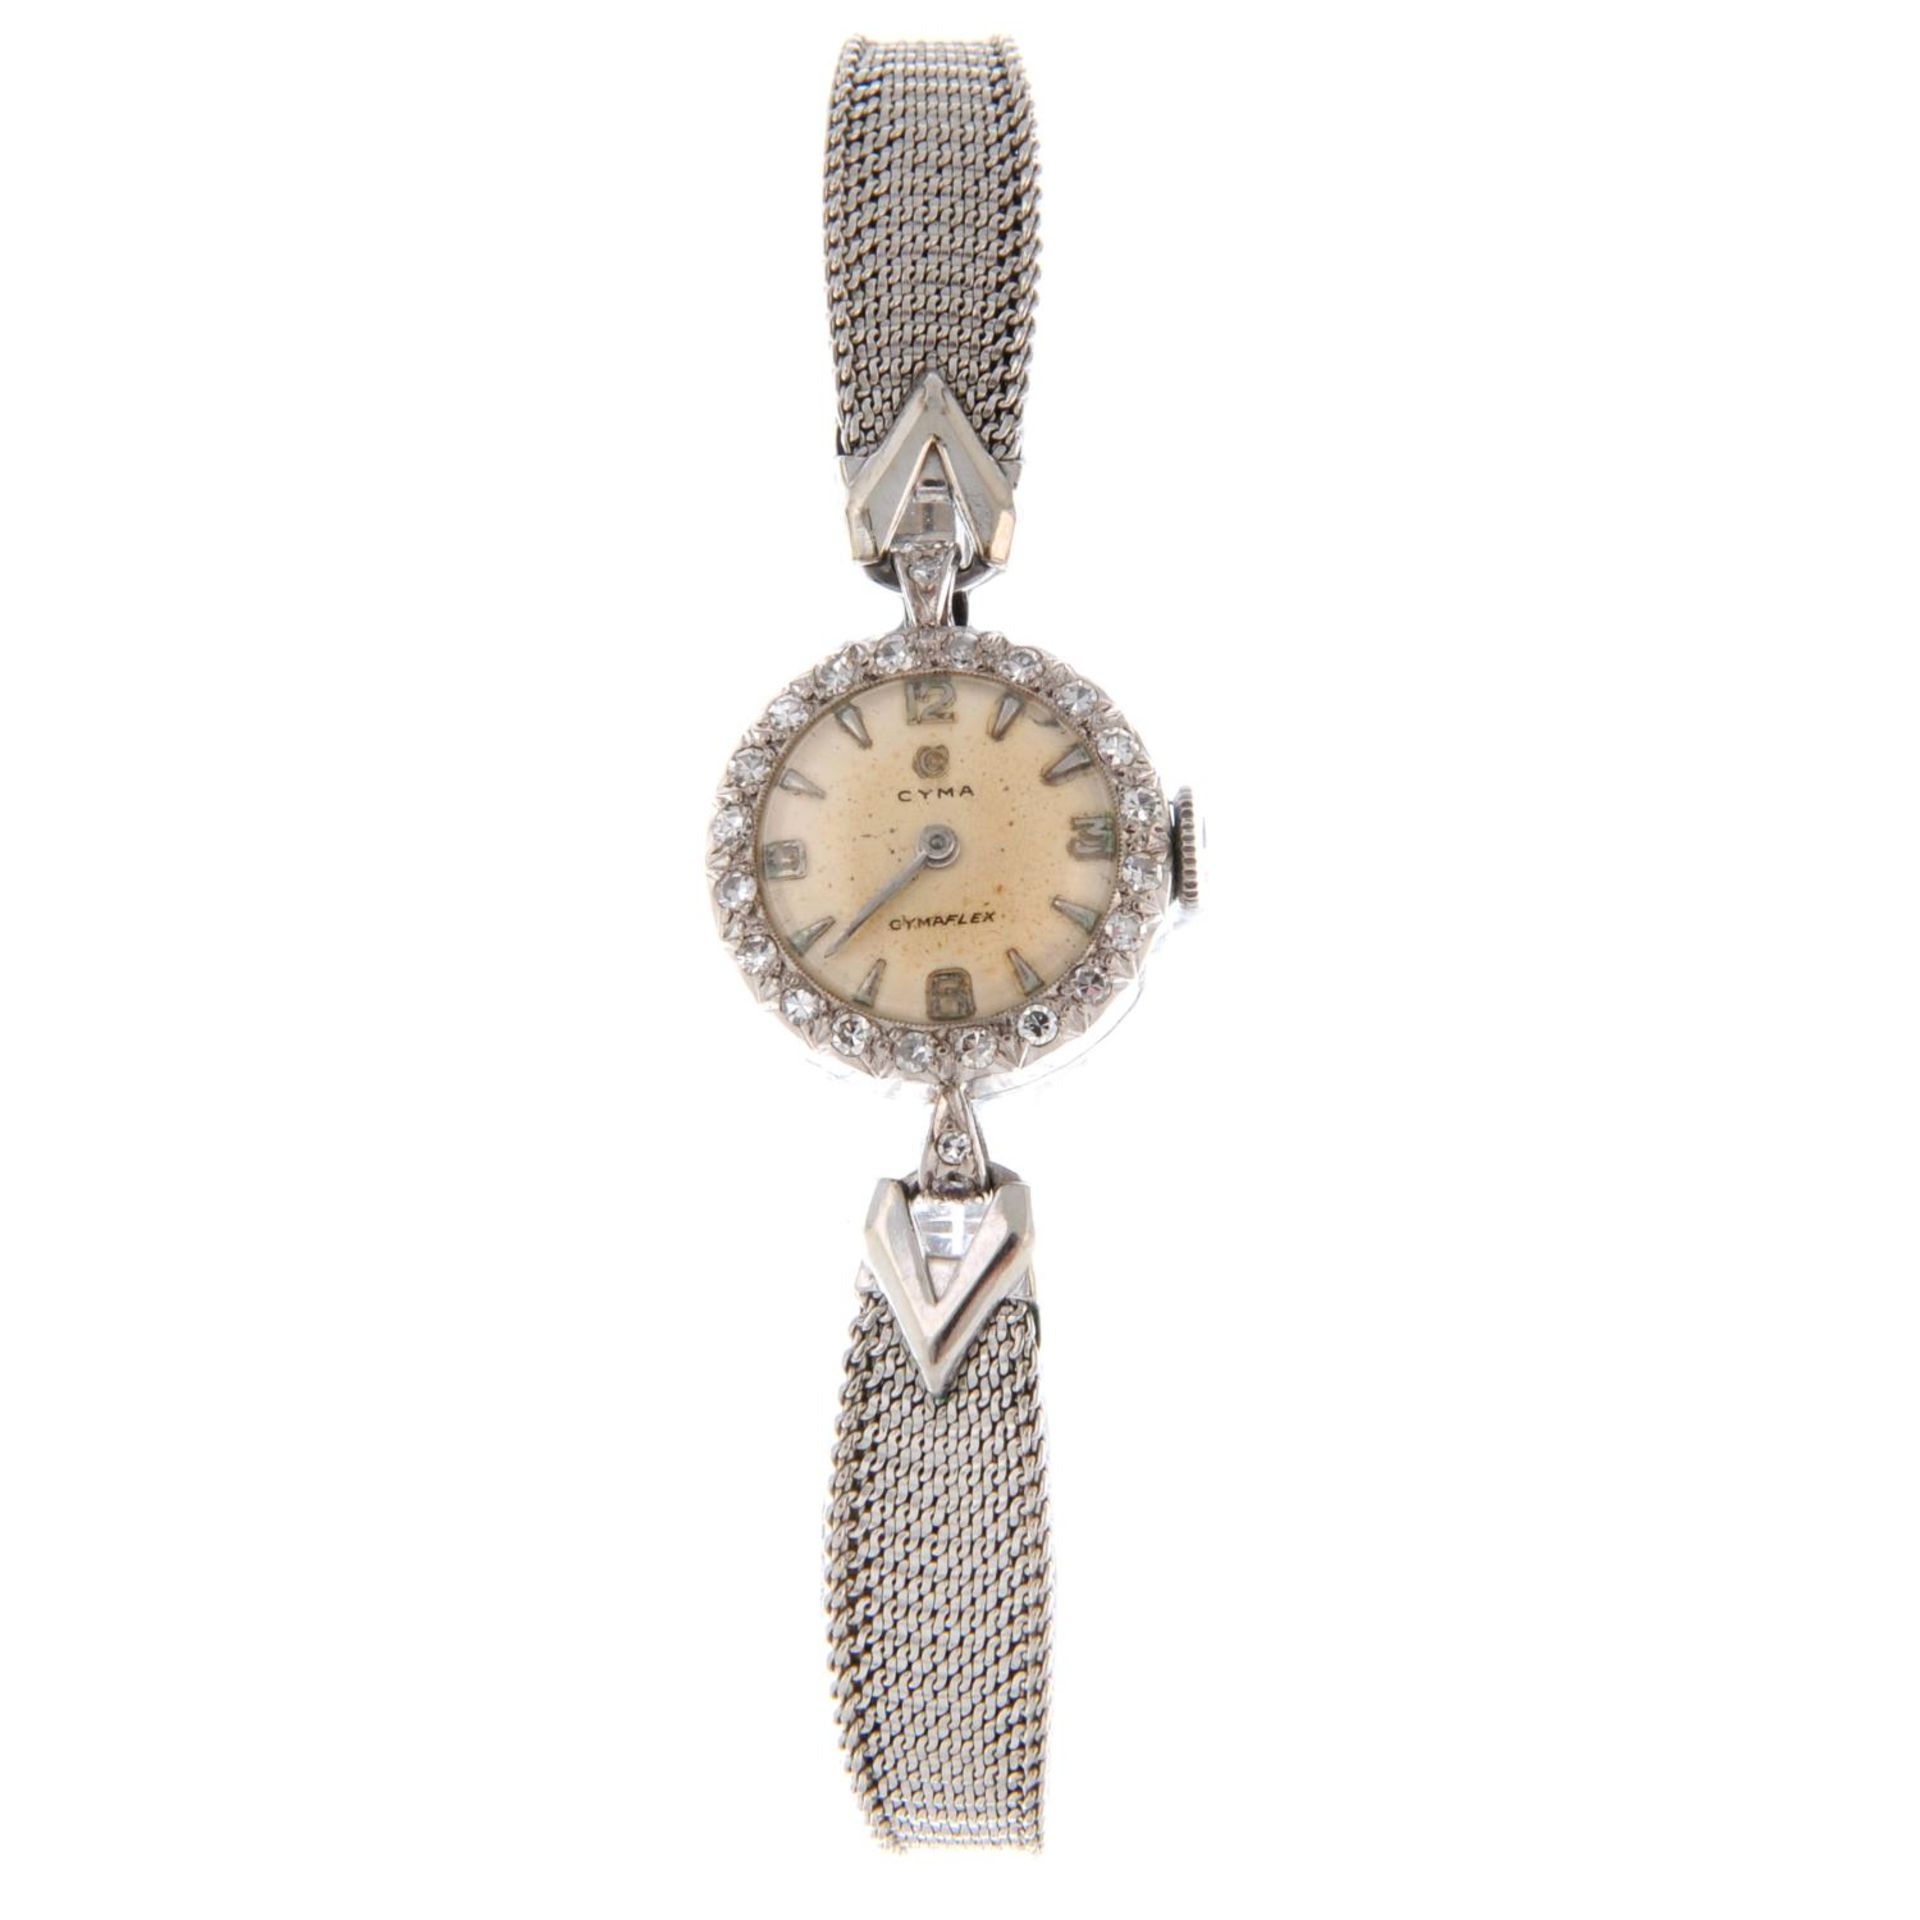 LONGINES - a bracelet watch. - Image 5 of 5